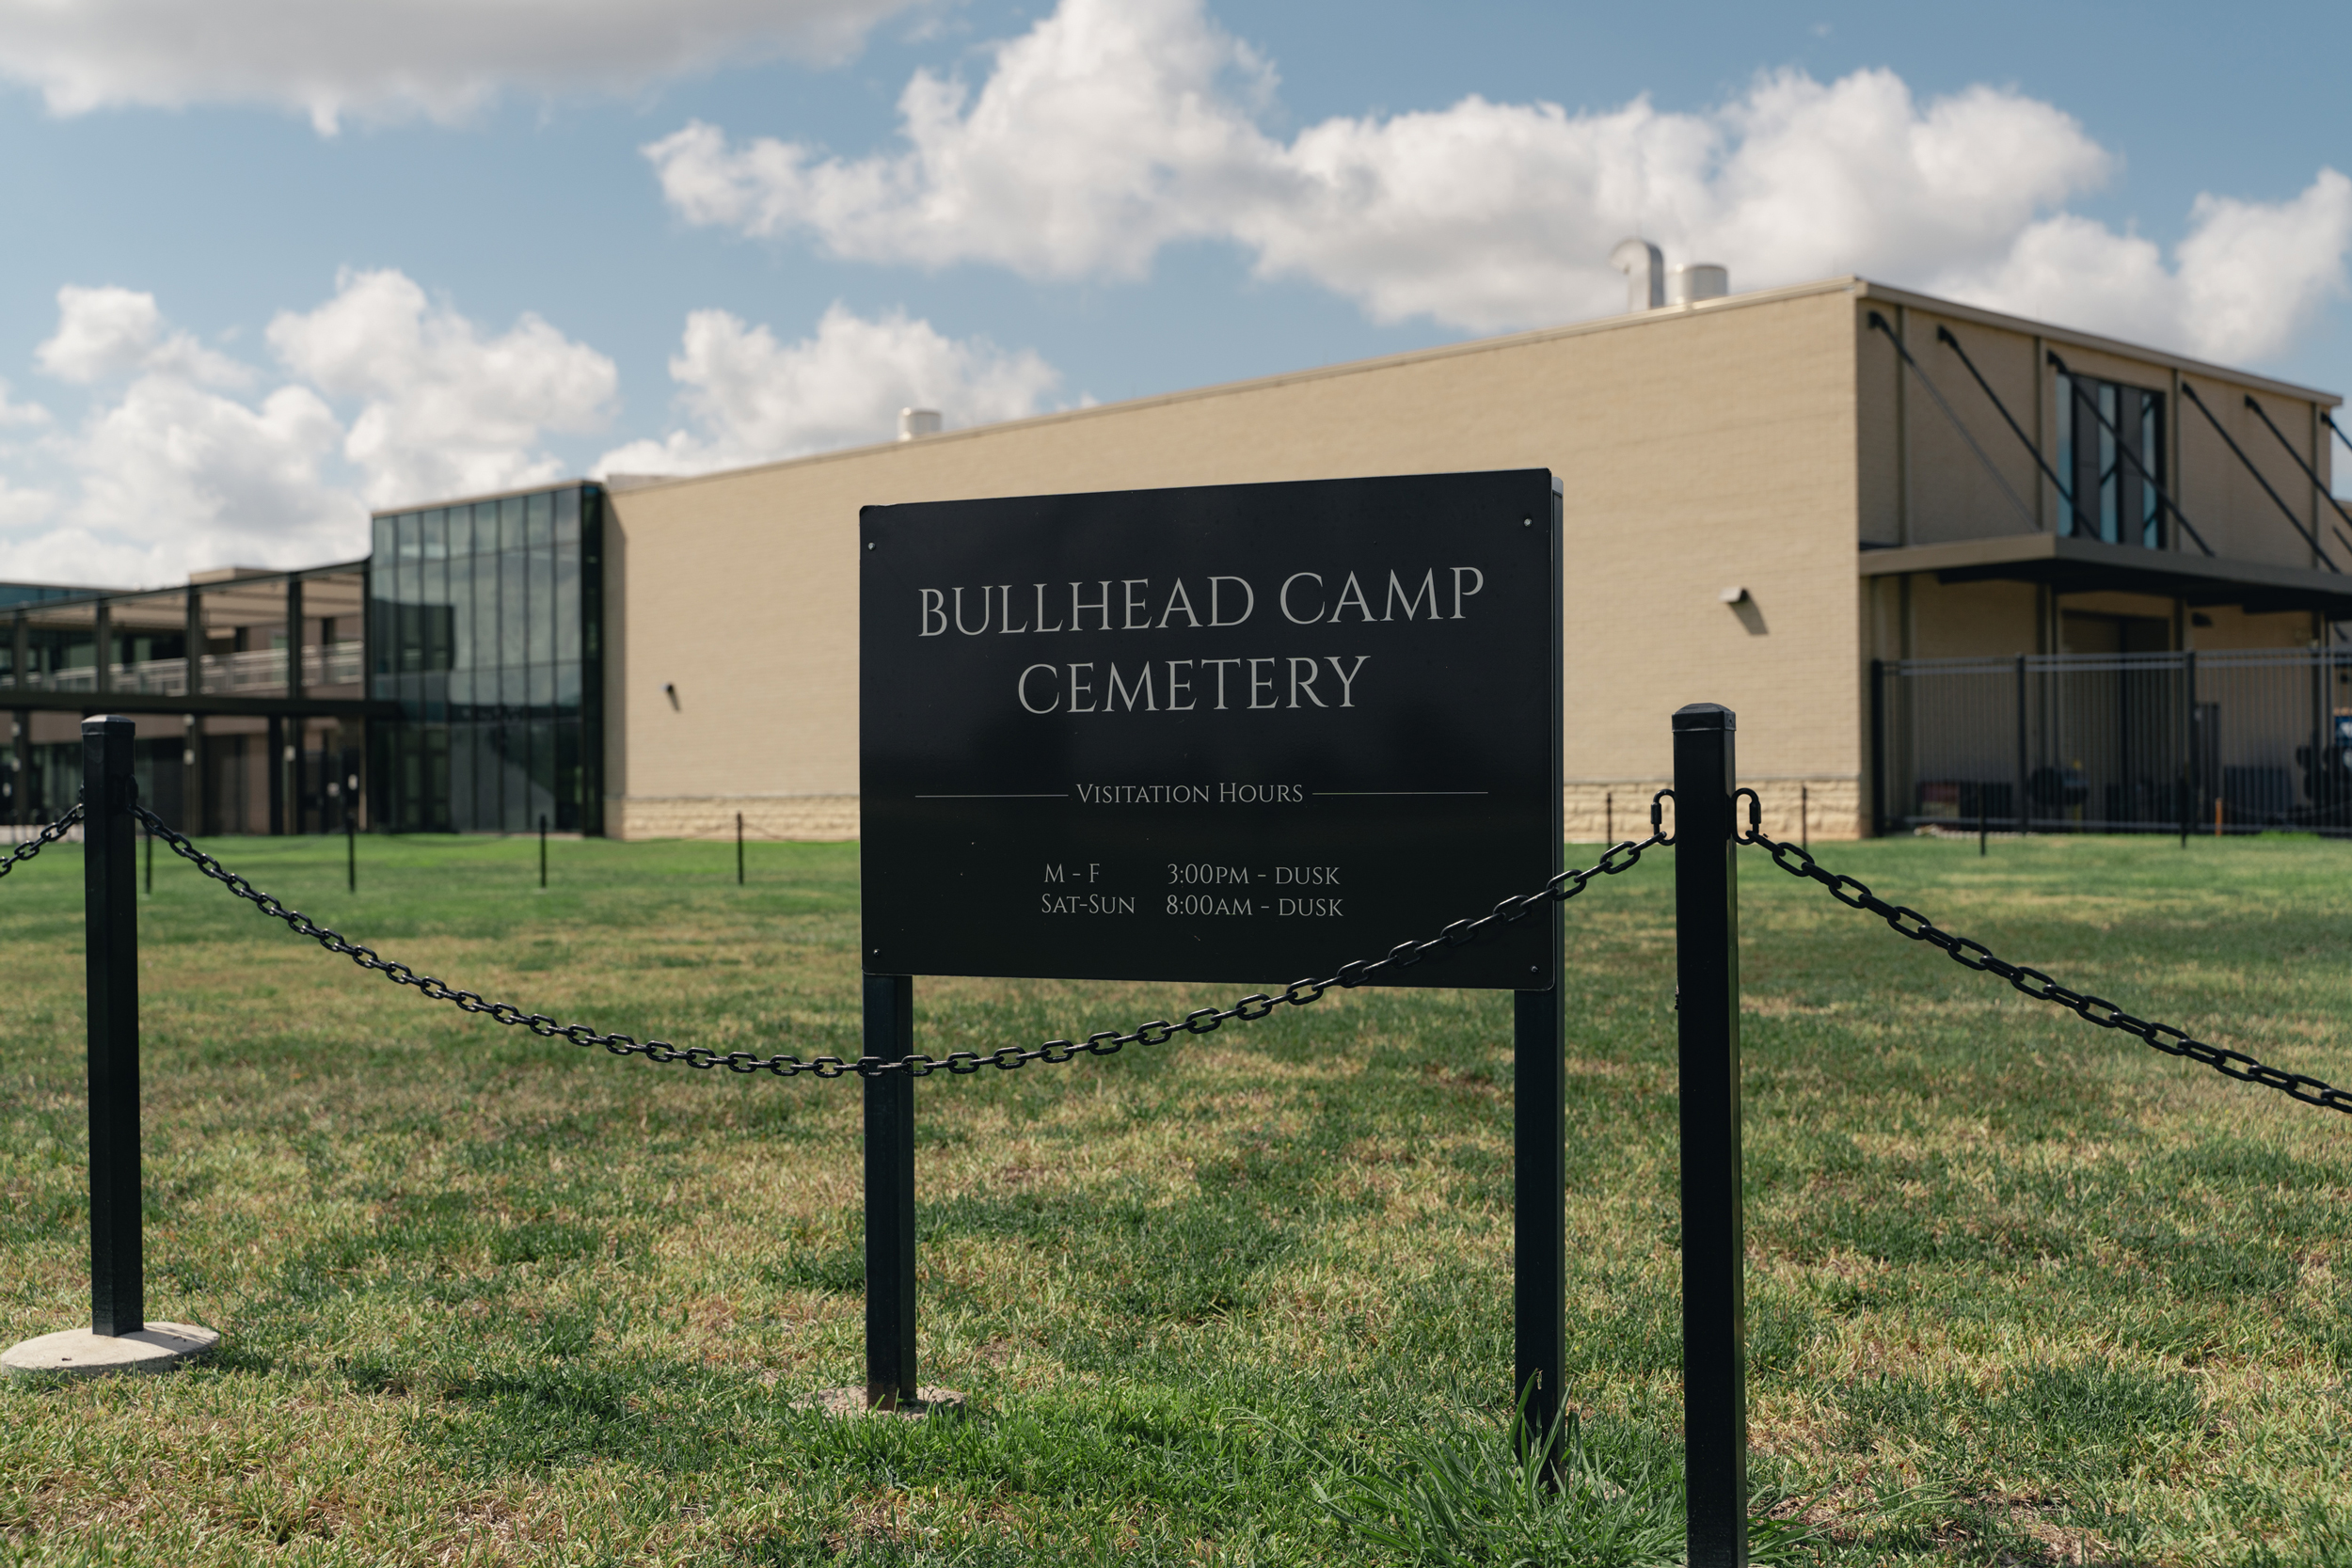 Bullhead Camp Cemetery in Sugar Land